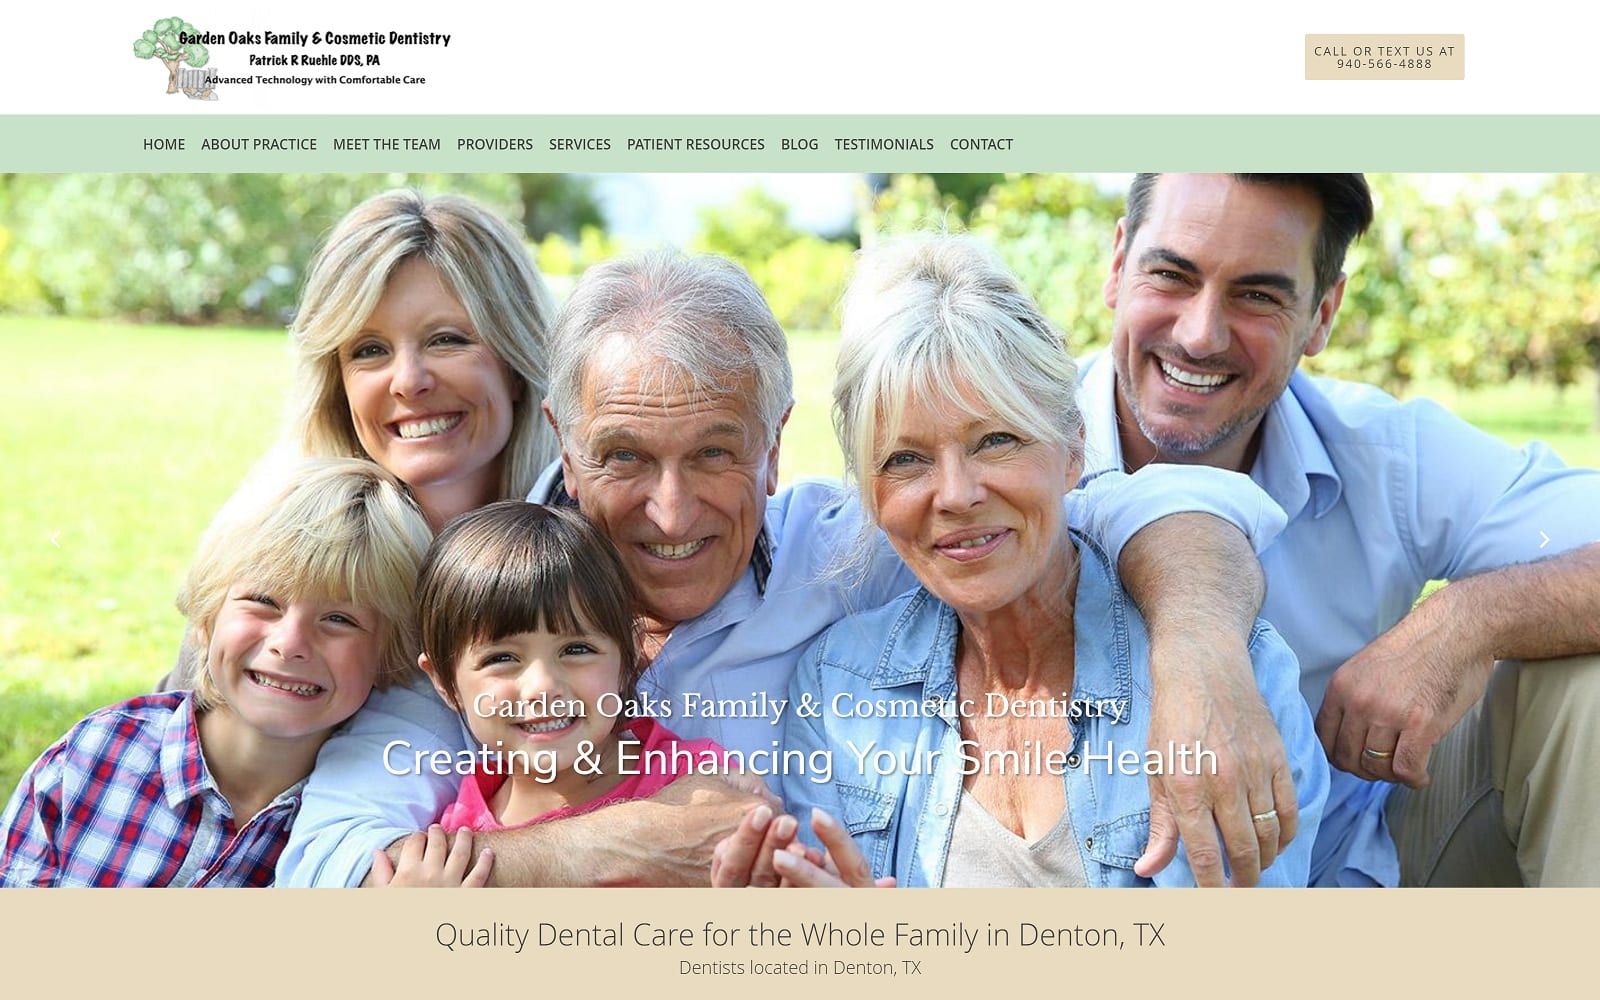 The screenshot of garden oaks family & cosmetic dentistry gardenoaksfamilydental. Com dr. Patrick ruehle website